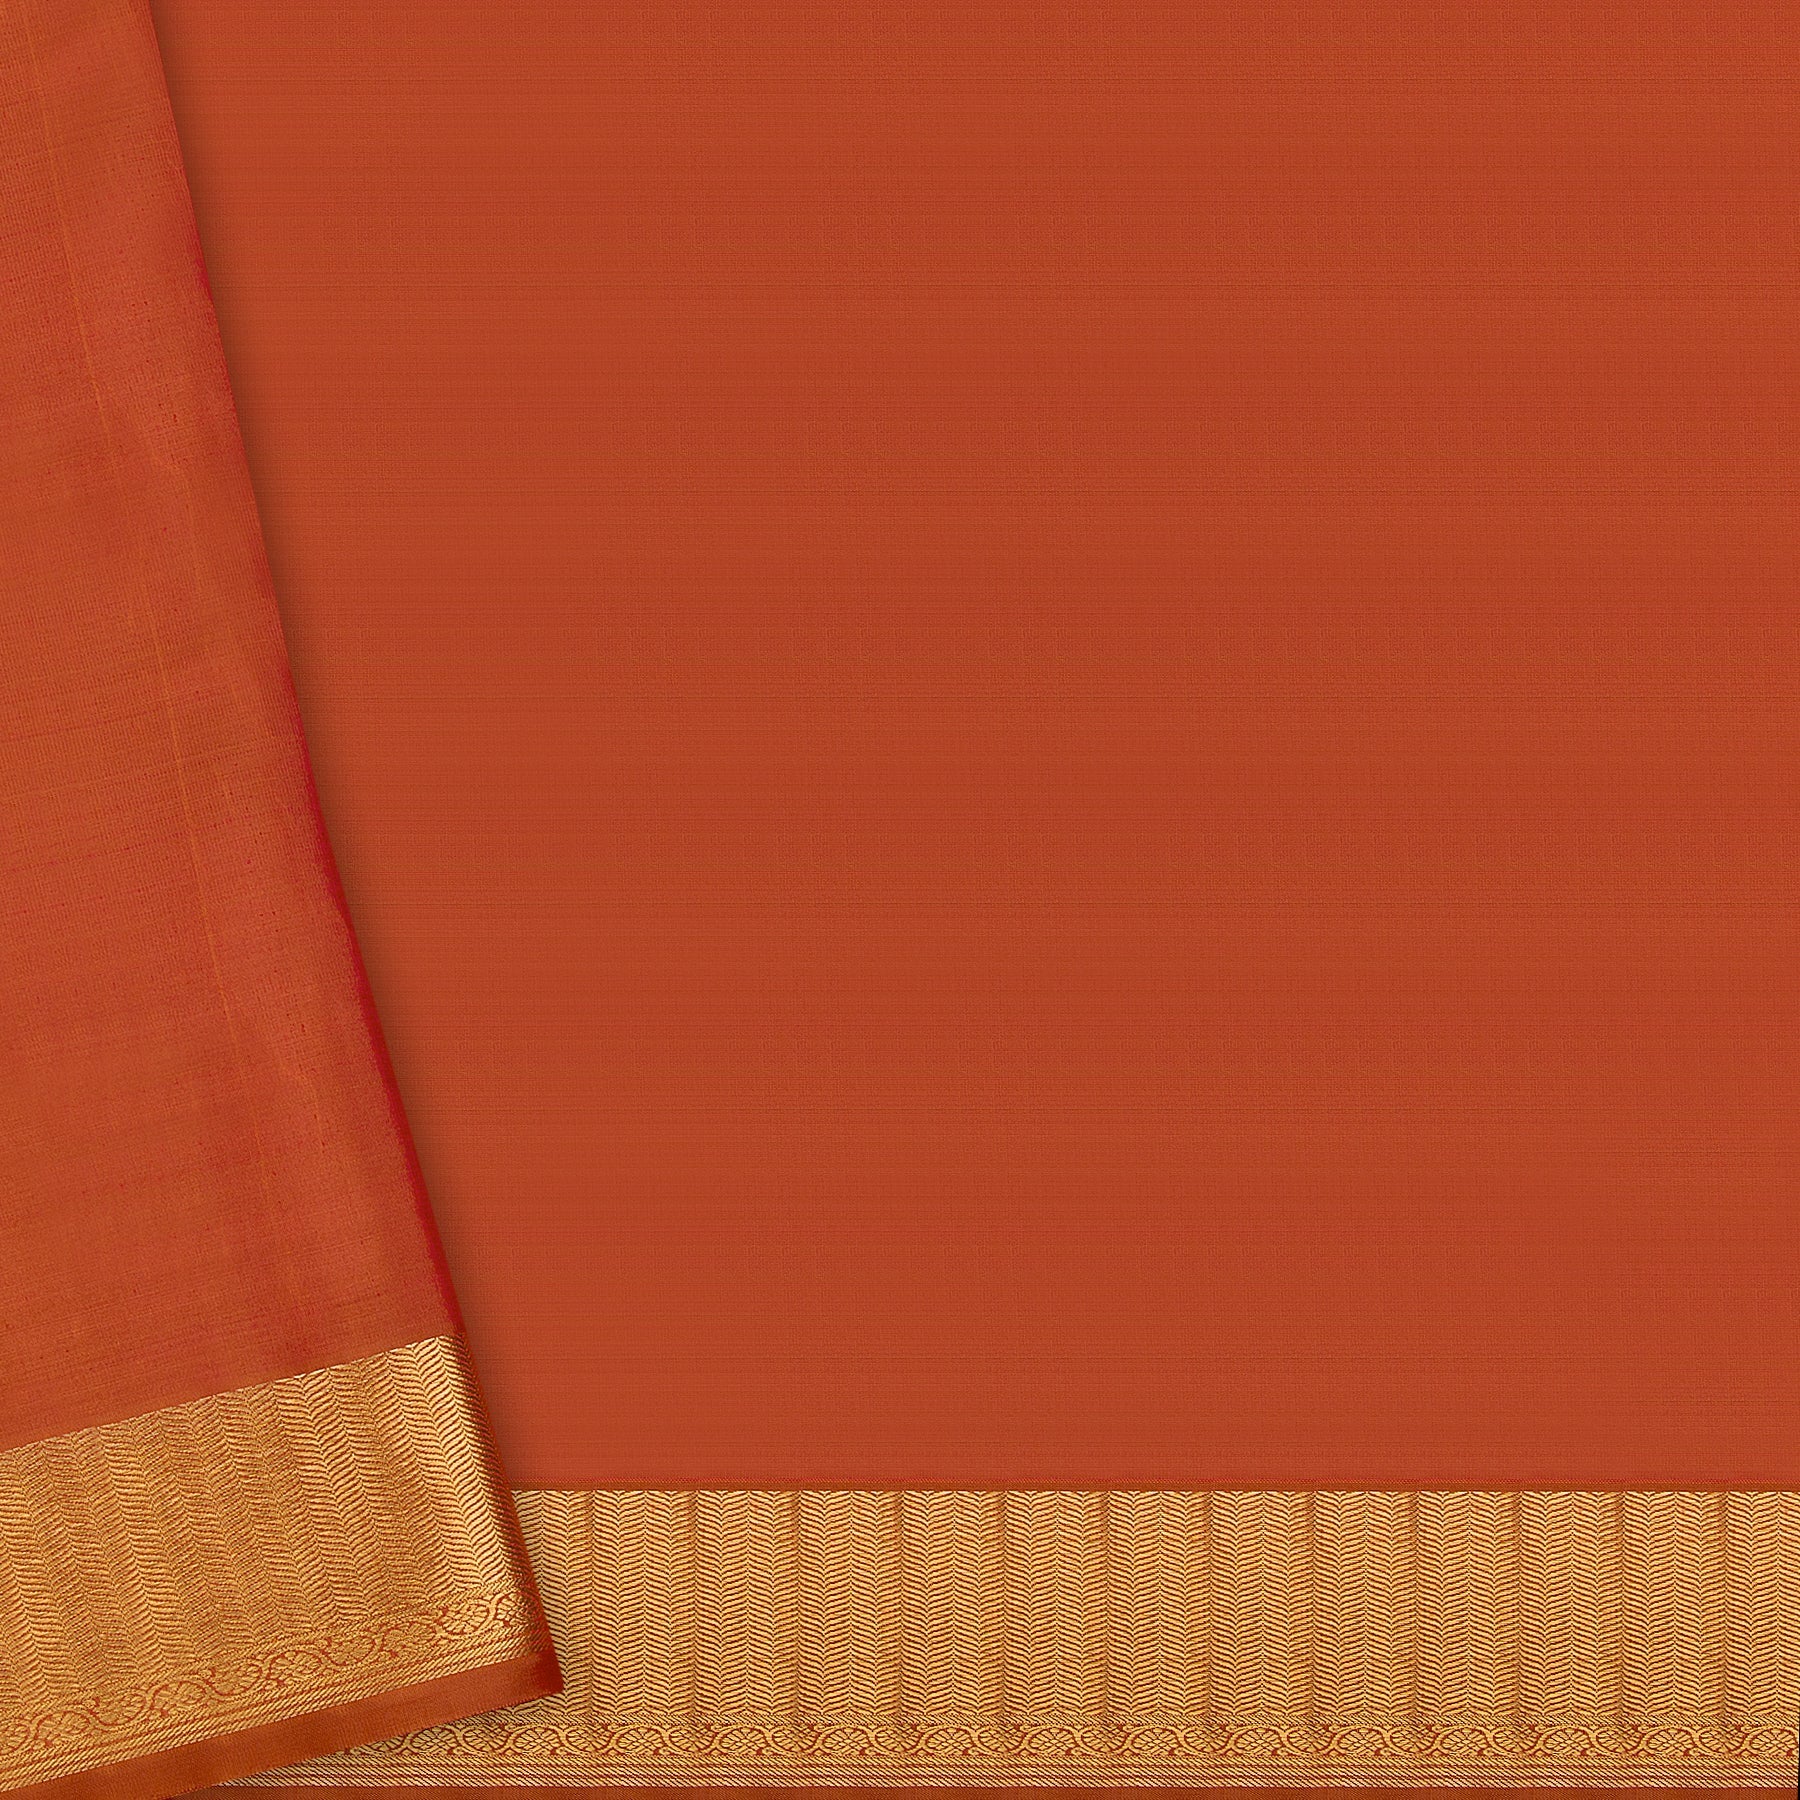 Kanakavalli Kanjivaram Silk Sari 23-599-HS001-04097 - Blouse View